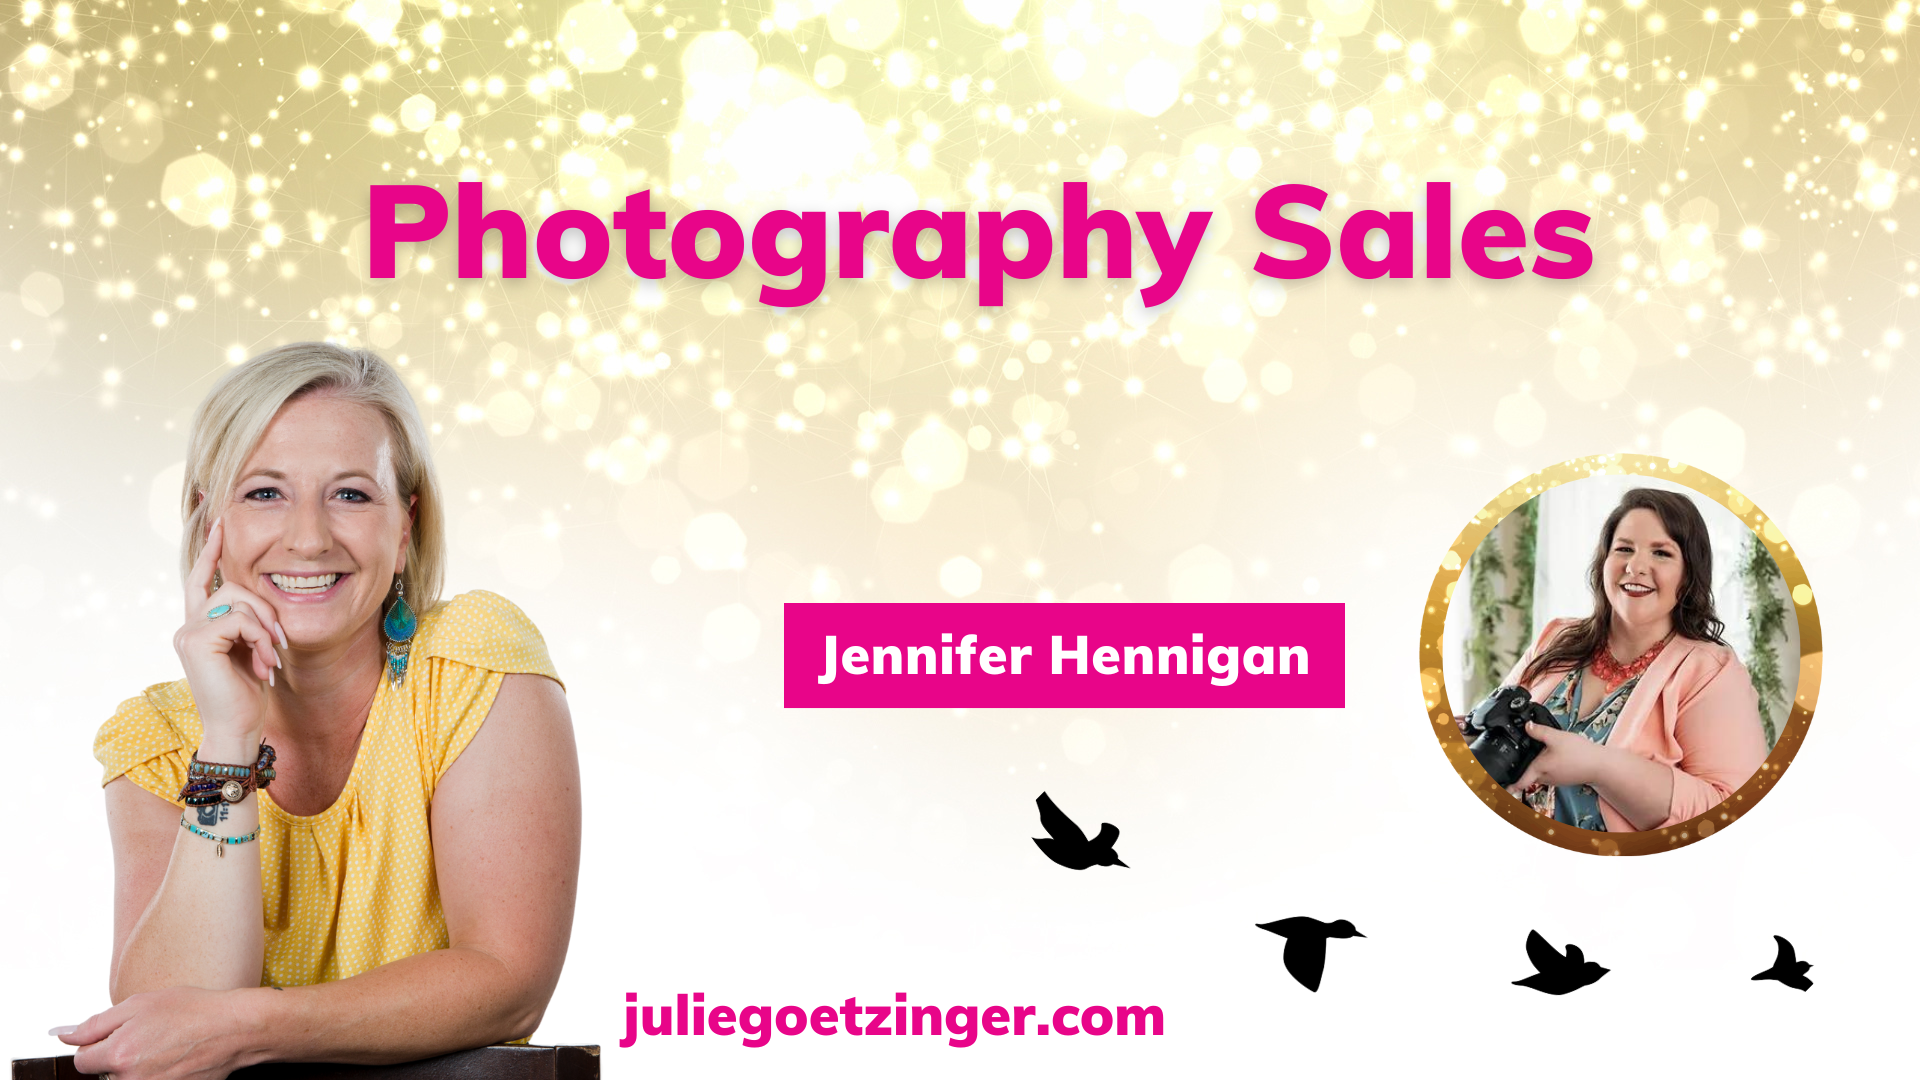 Photography Sales with Jennifer Hennigan